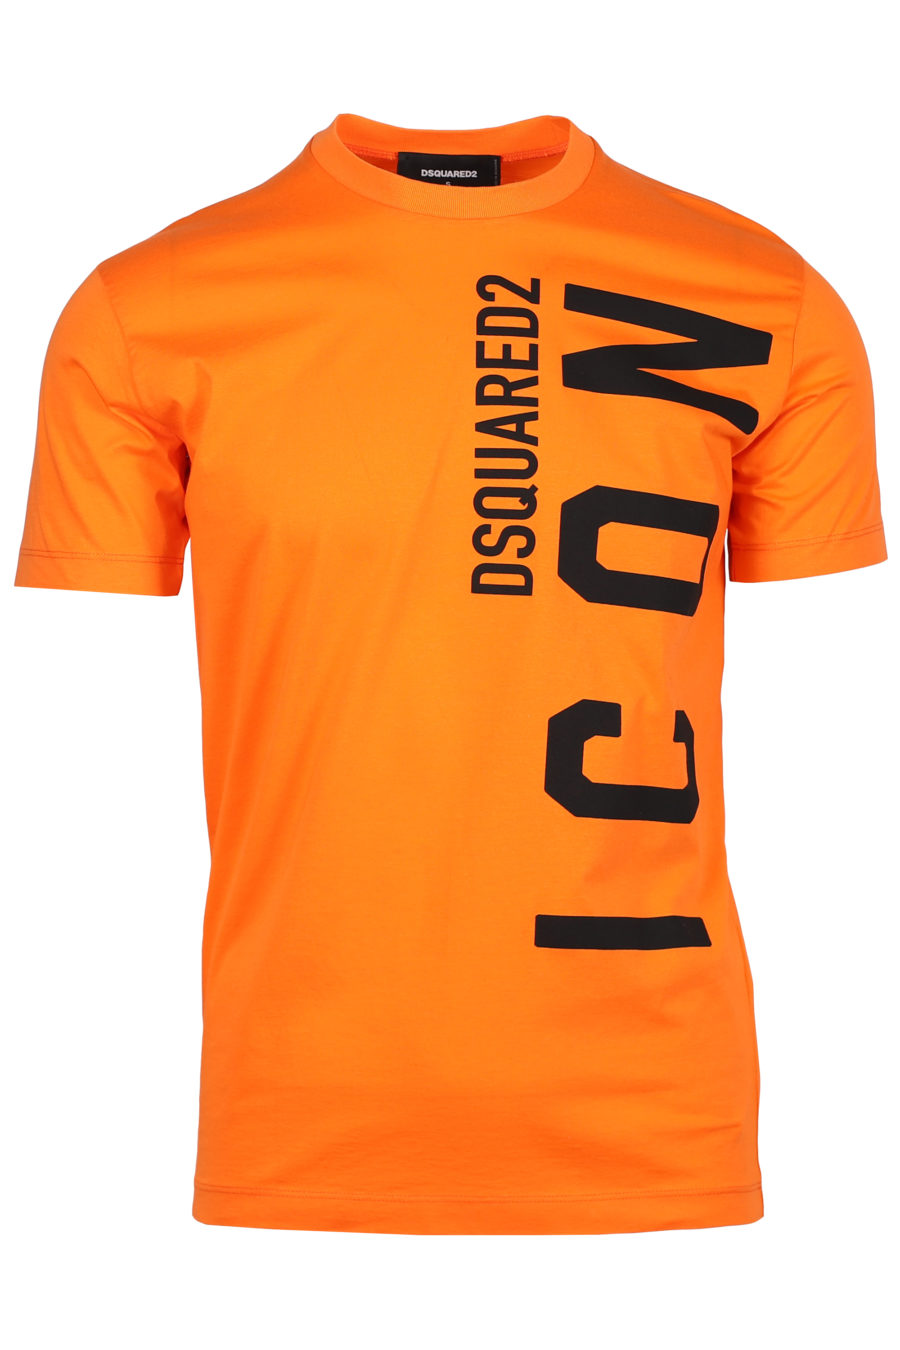 Camiseta naranja con logo "Icon" vertical” - IMG 2324